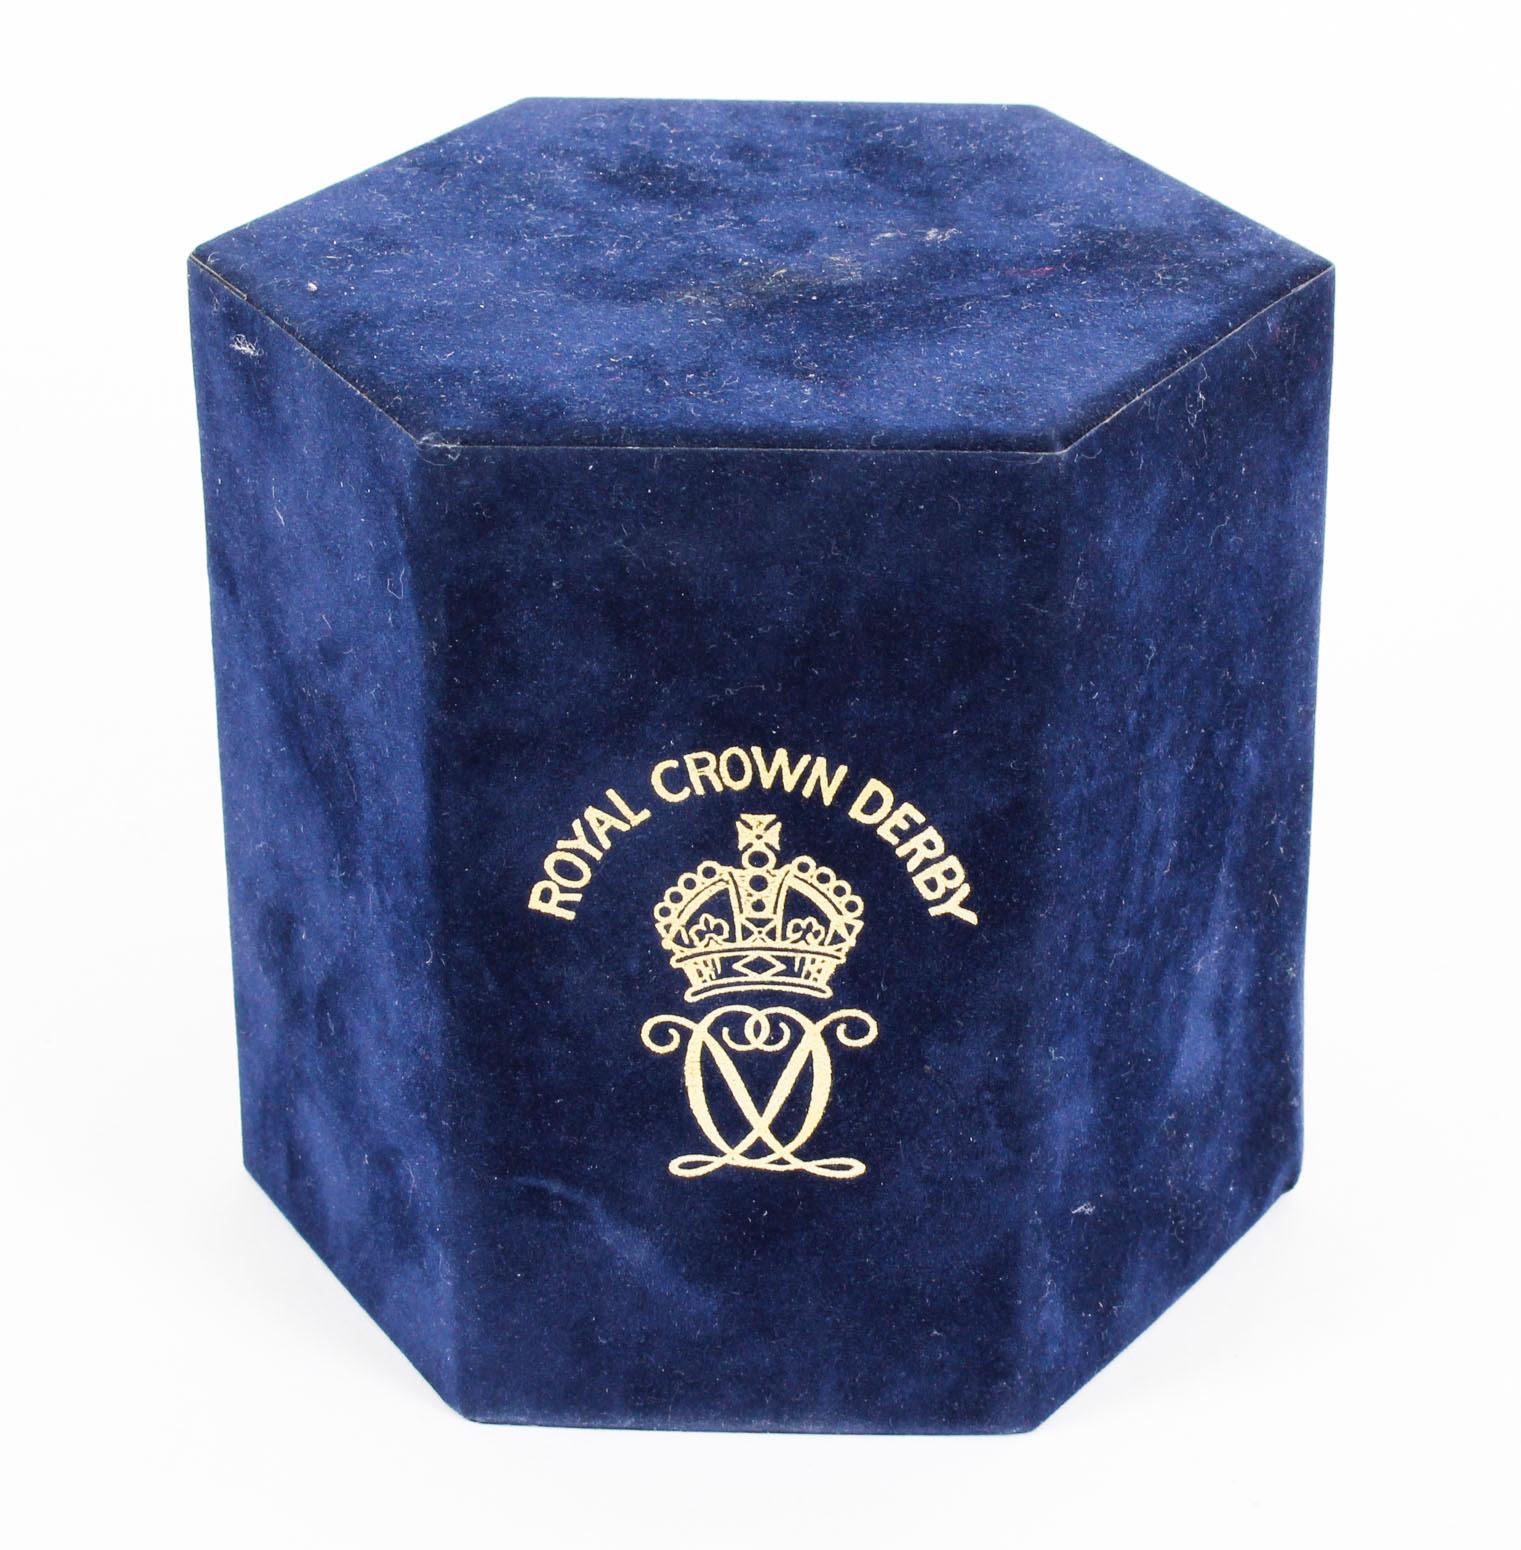 Vintage Cased Royal Crown Derby Commemorative Crown Paperweight, 1990 6